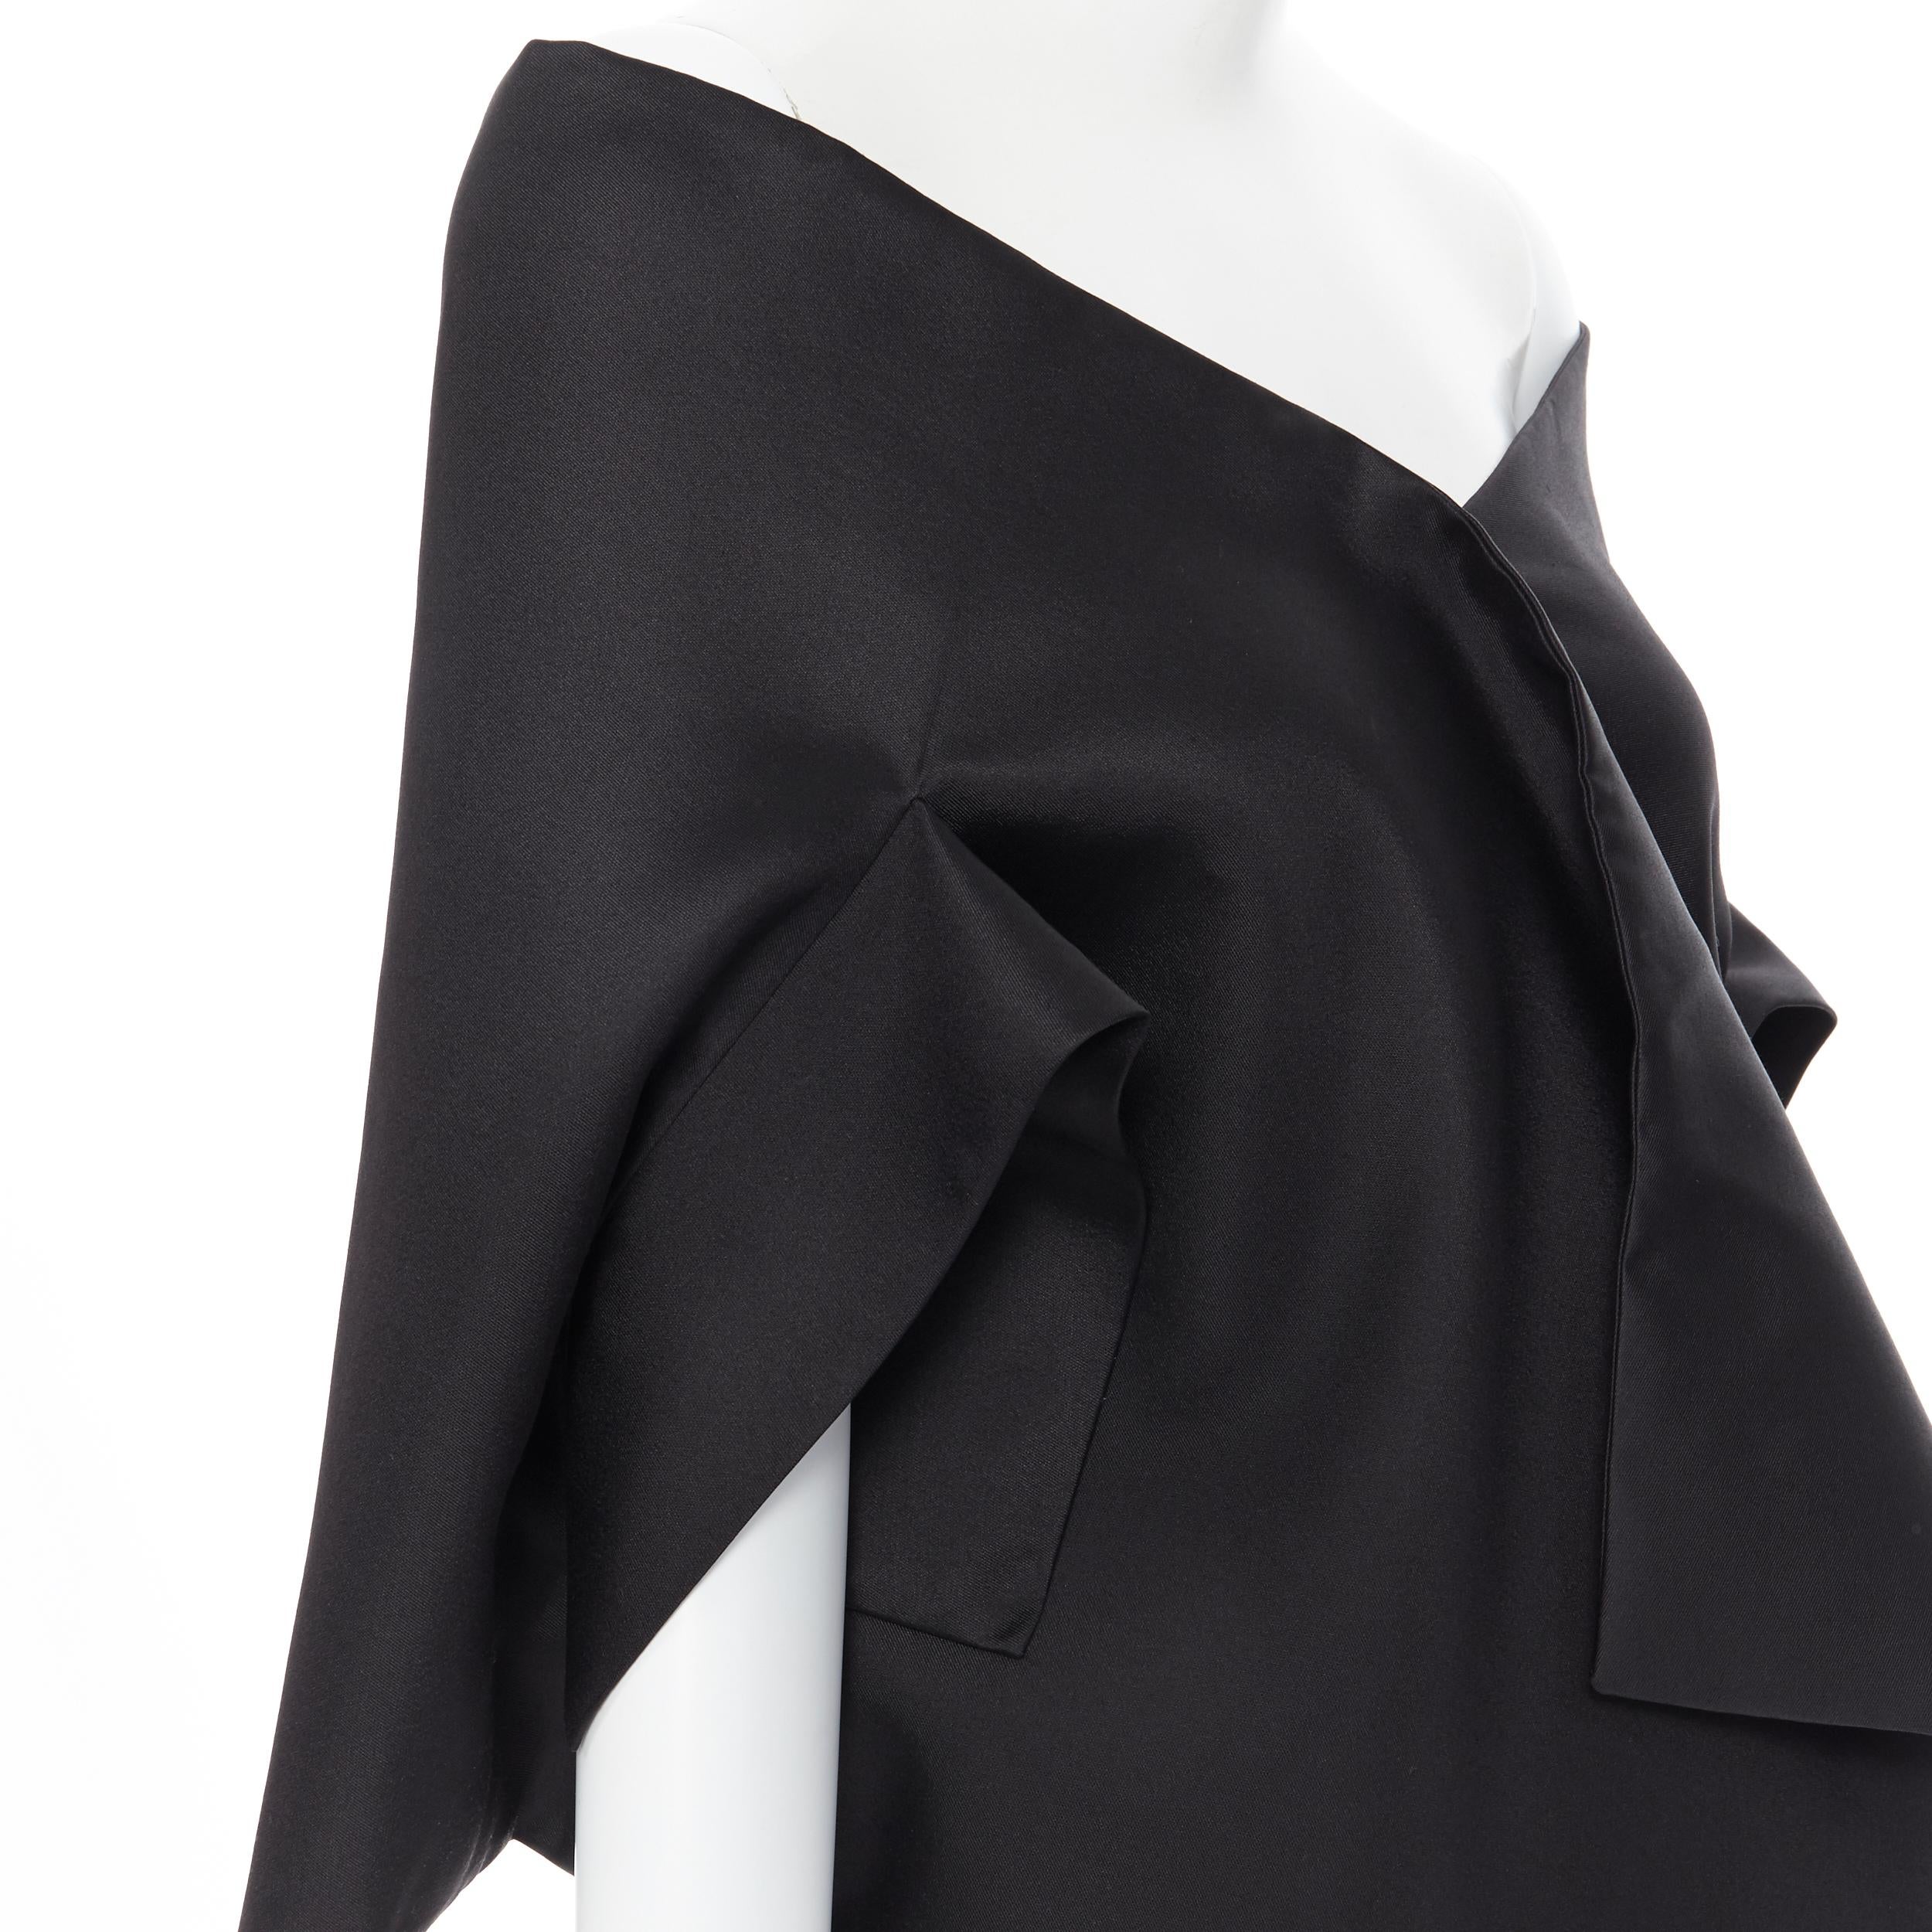 new PRADA Special Edition black wool silk kimono sleeve off shoulder shawl cape
Brand: Prada
Designer: Miuccia Prada
Collection: Special Edition Label
Model Name / Style: Kimono shawl
Material: Wool, silk
Color: Black
Pattern: Solid
Extra Detail: No